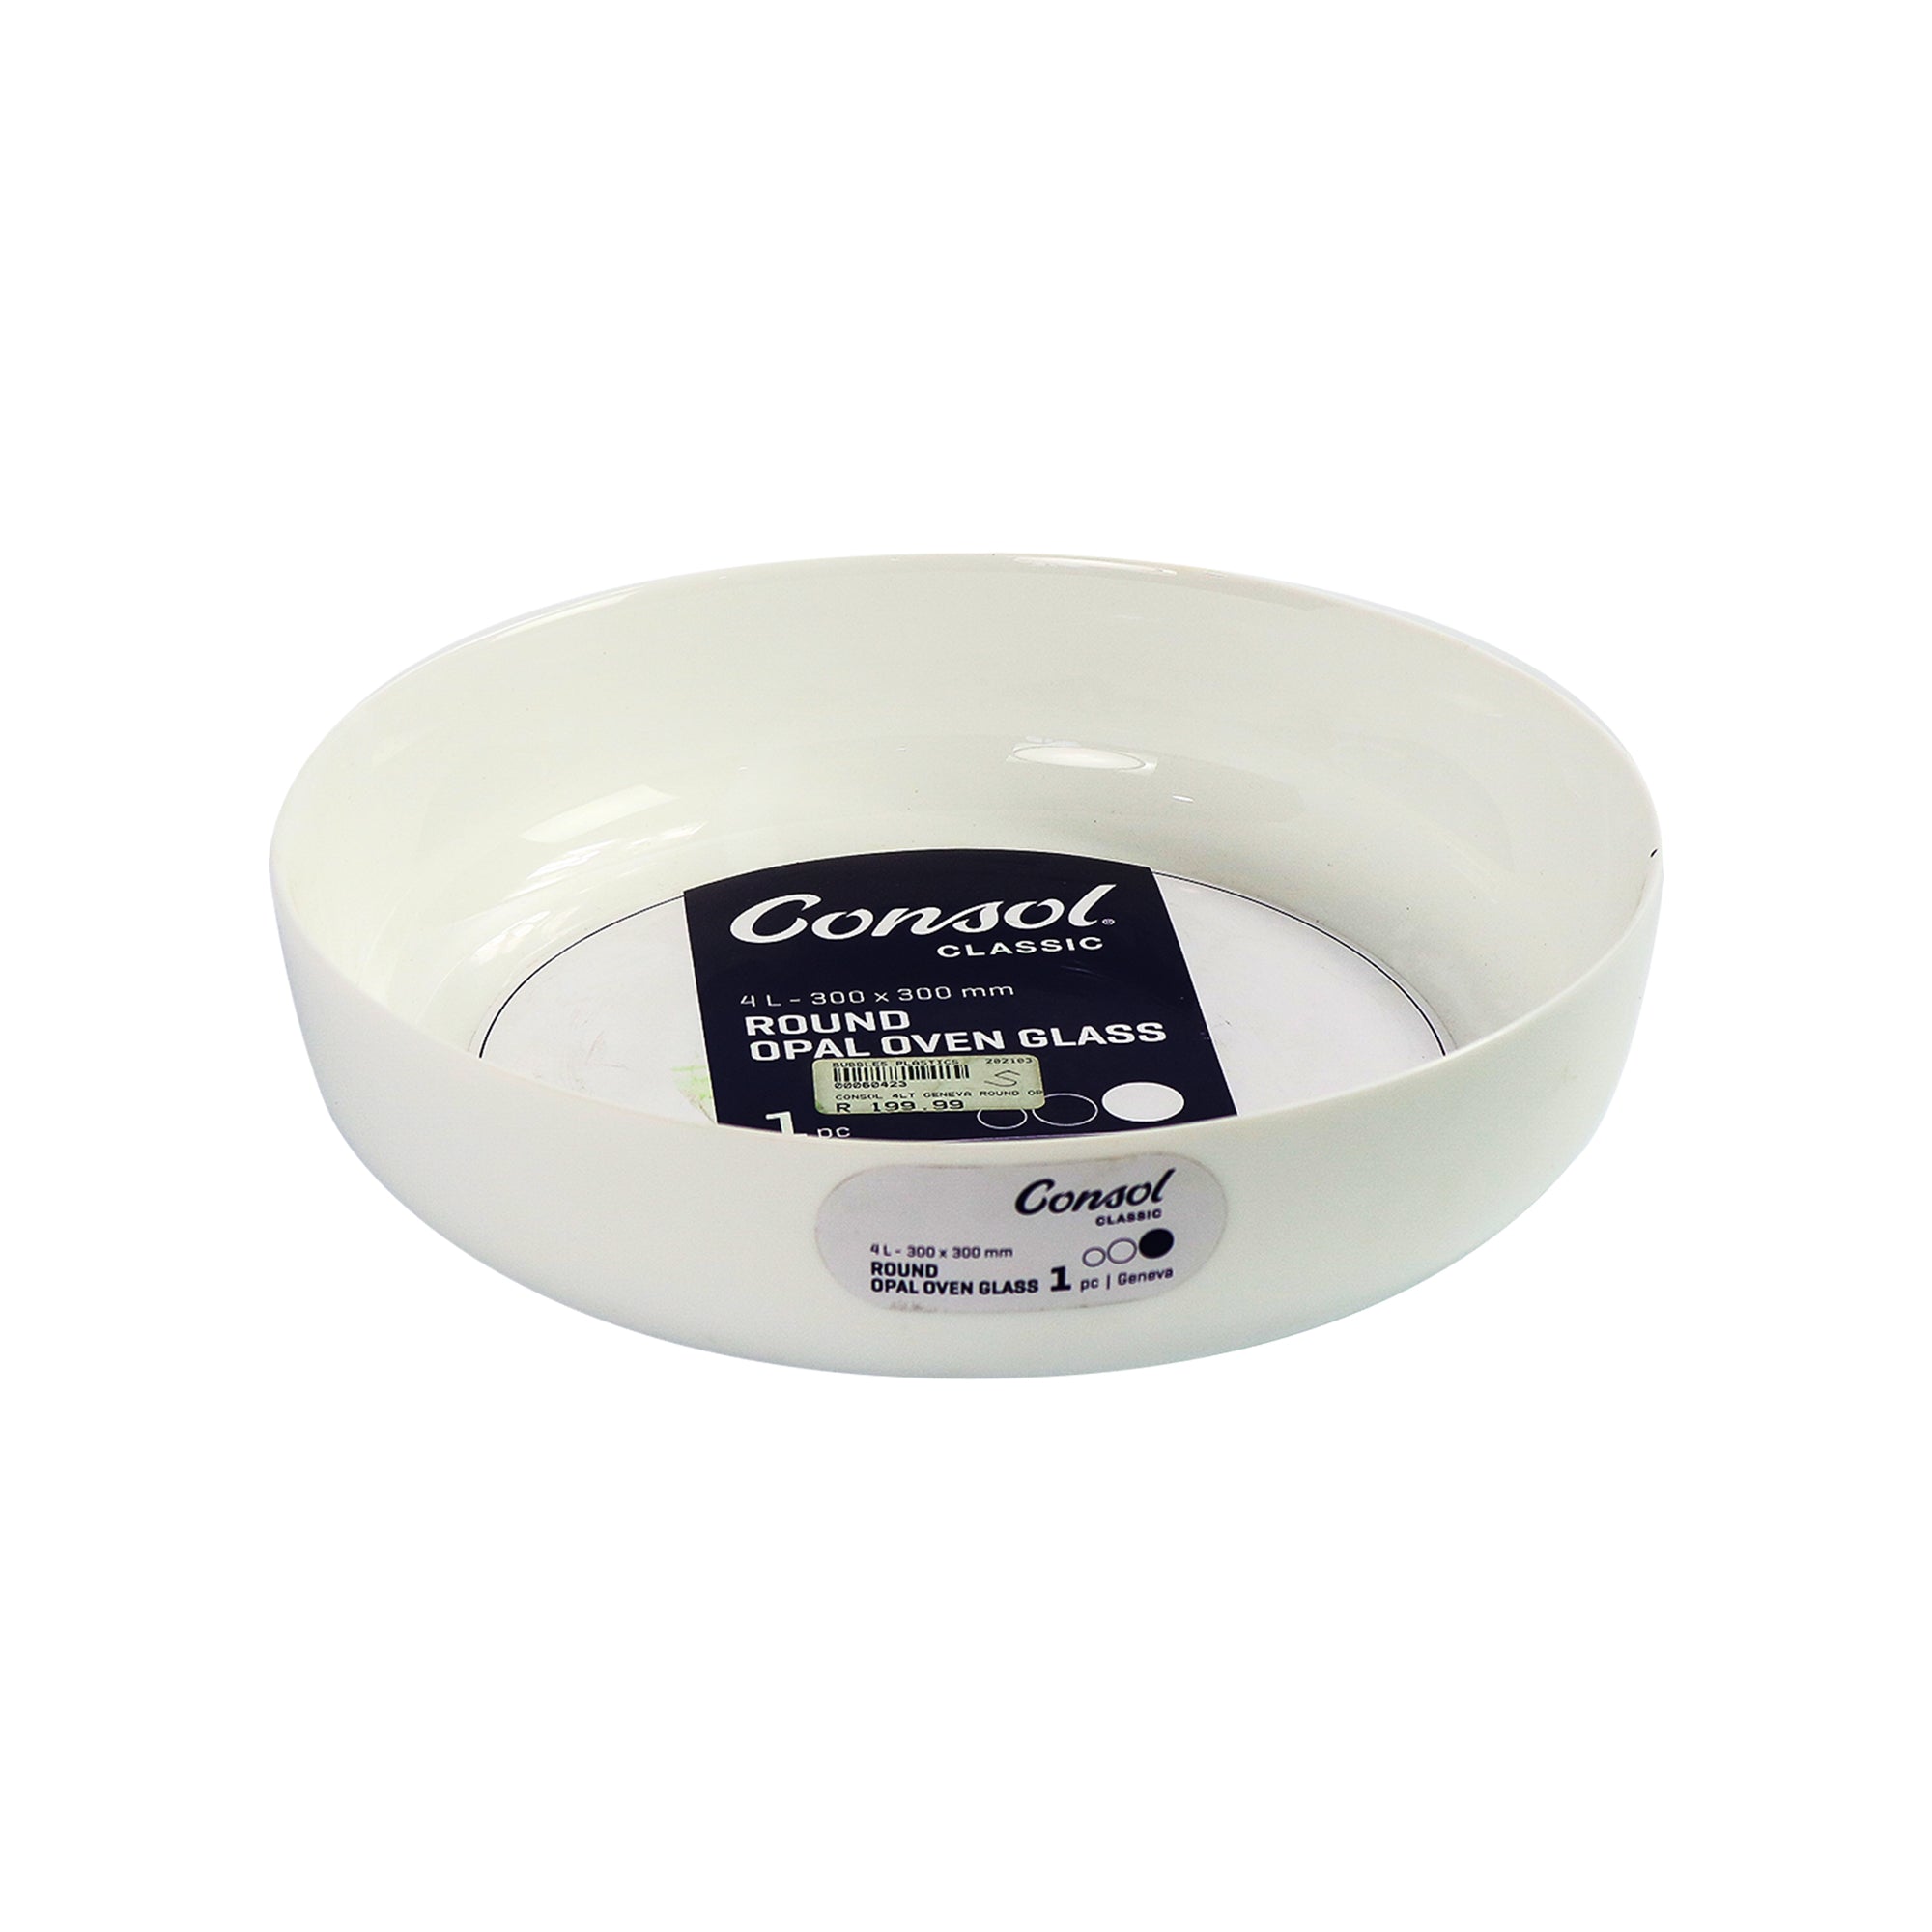 Consol 4lt Geneva Round Opal Oven Glass Dish 41050